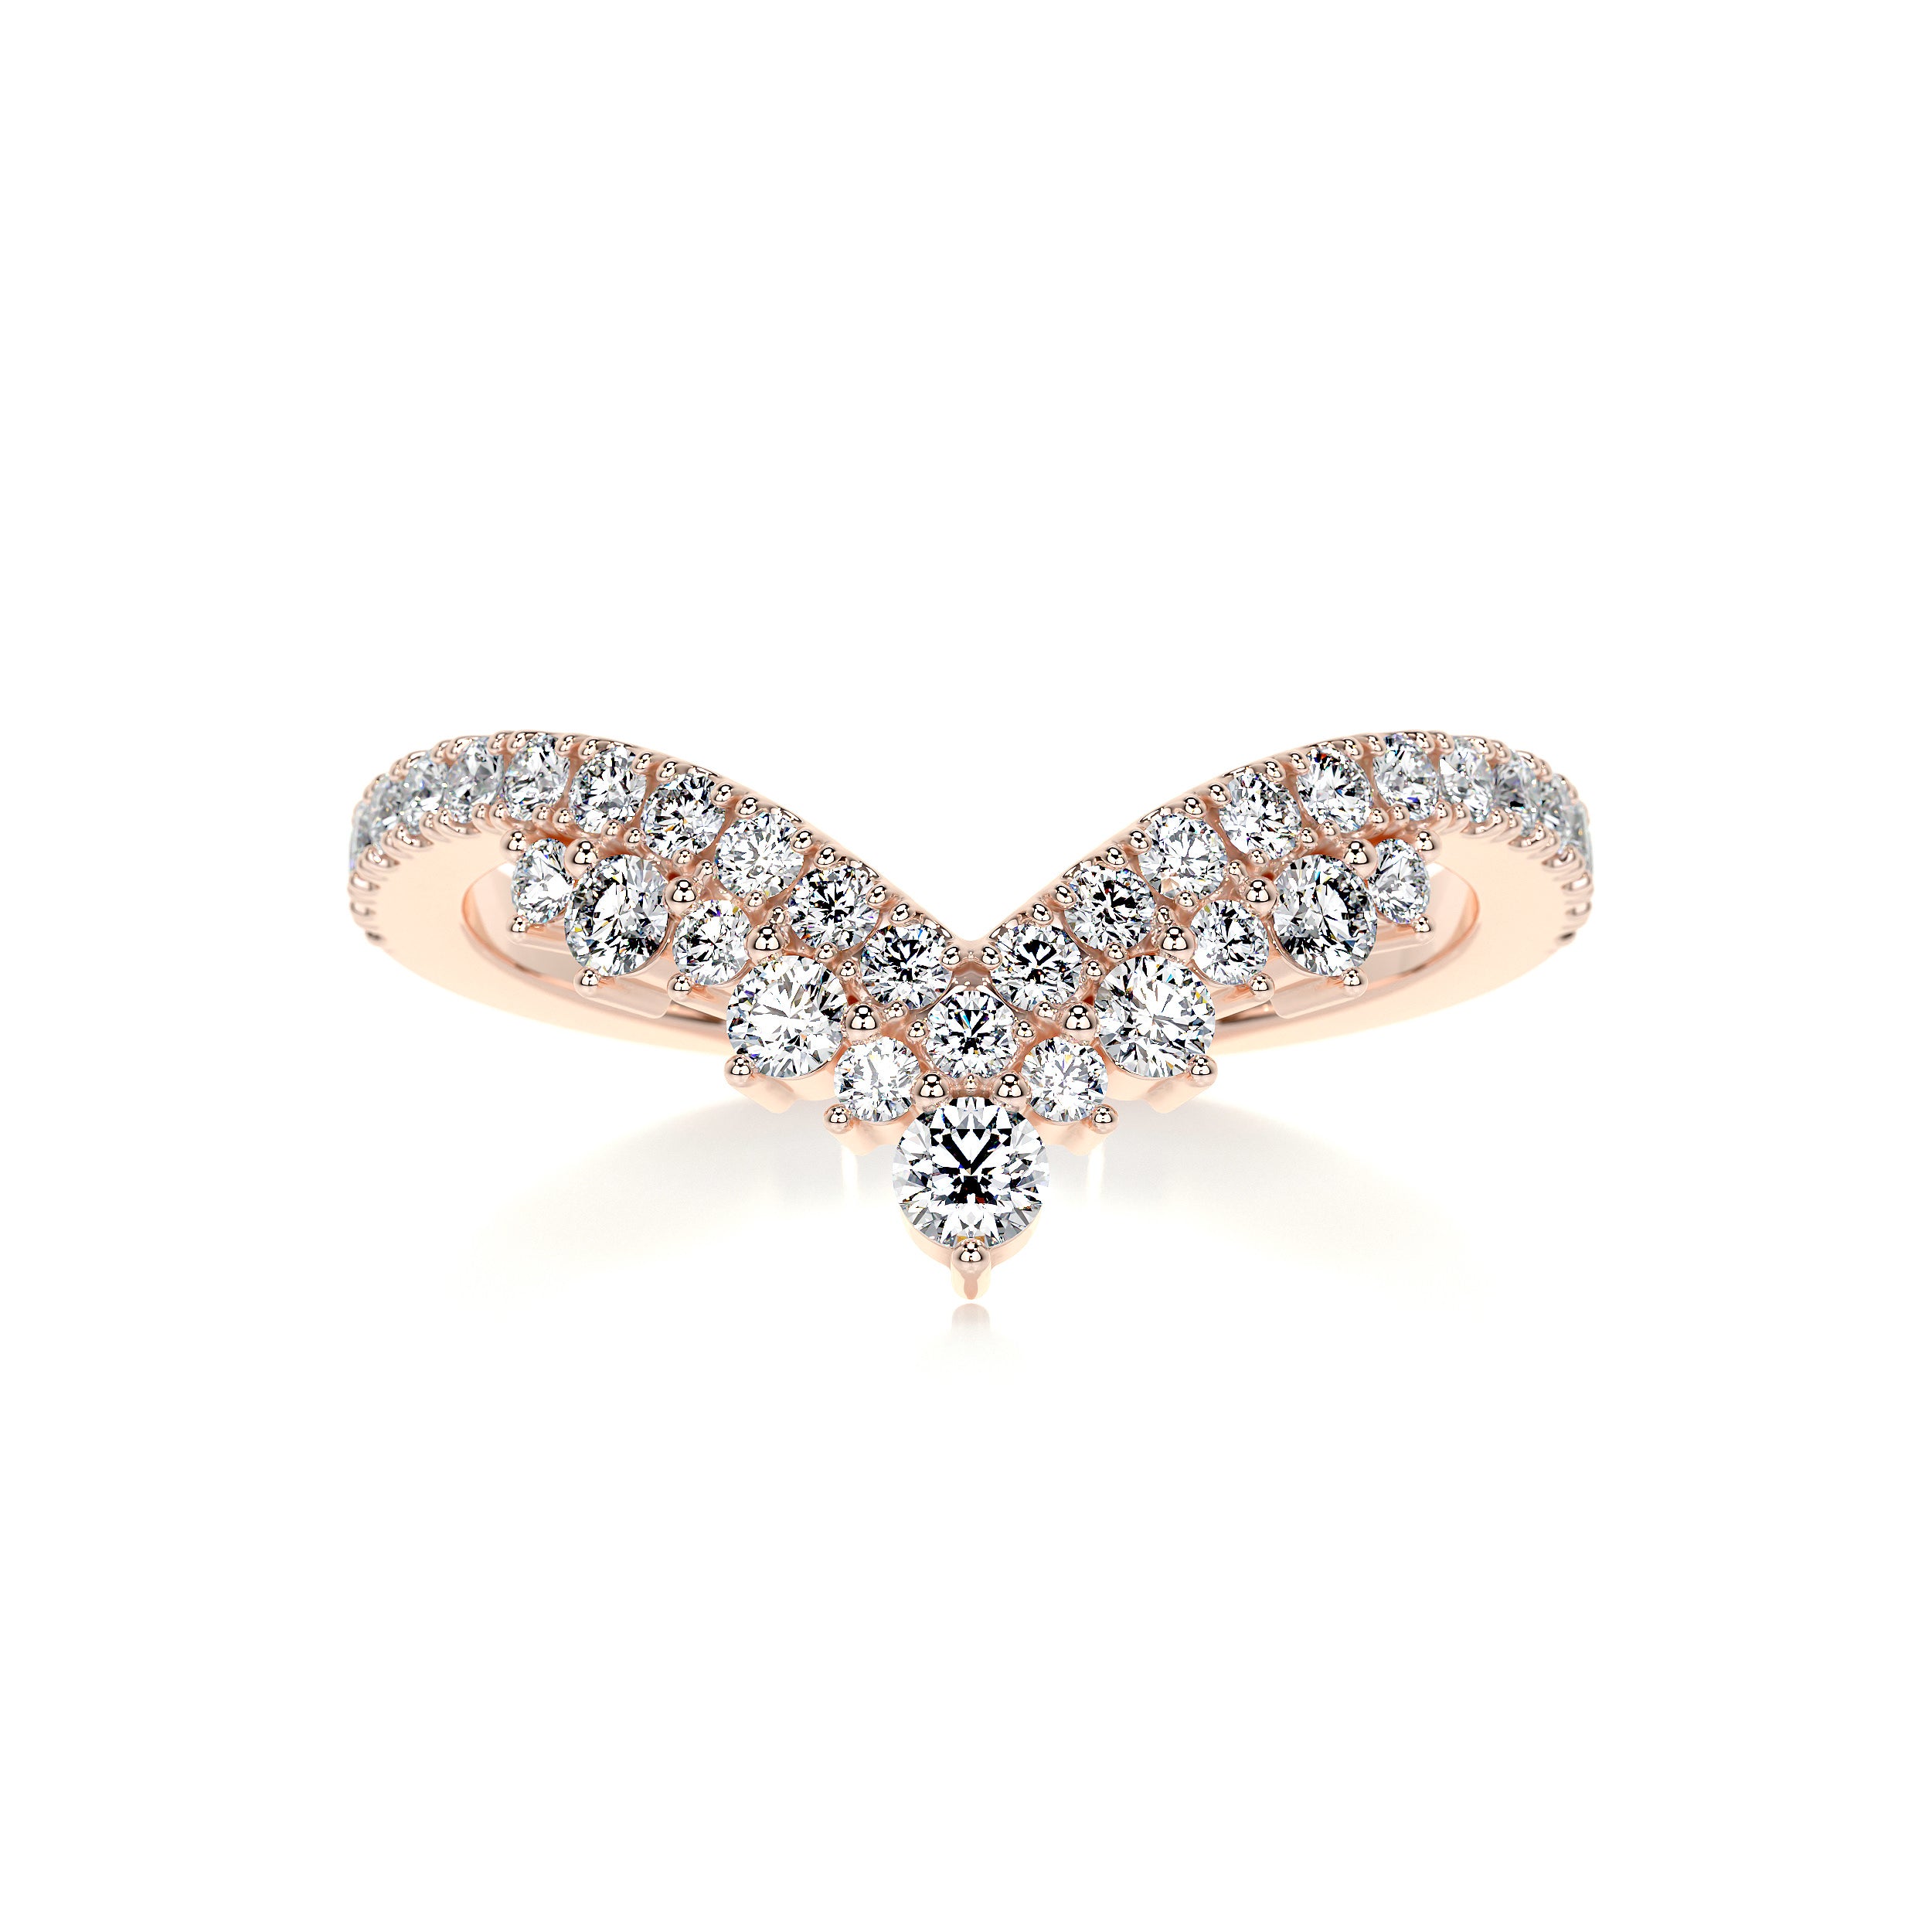 Mia Diamond Wedding Ring   (0.50 Carat) -14K Rose Gold